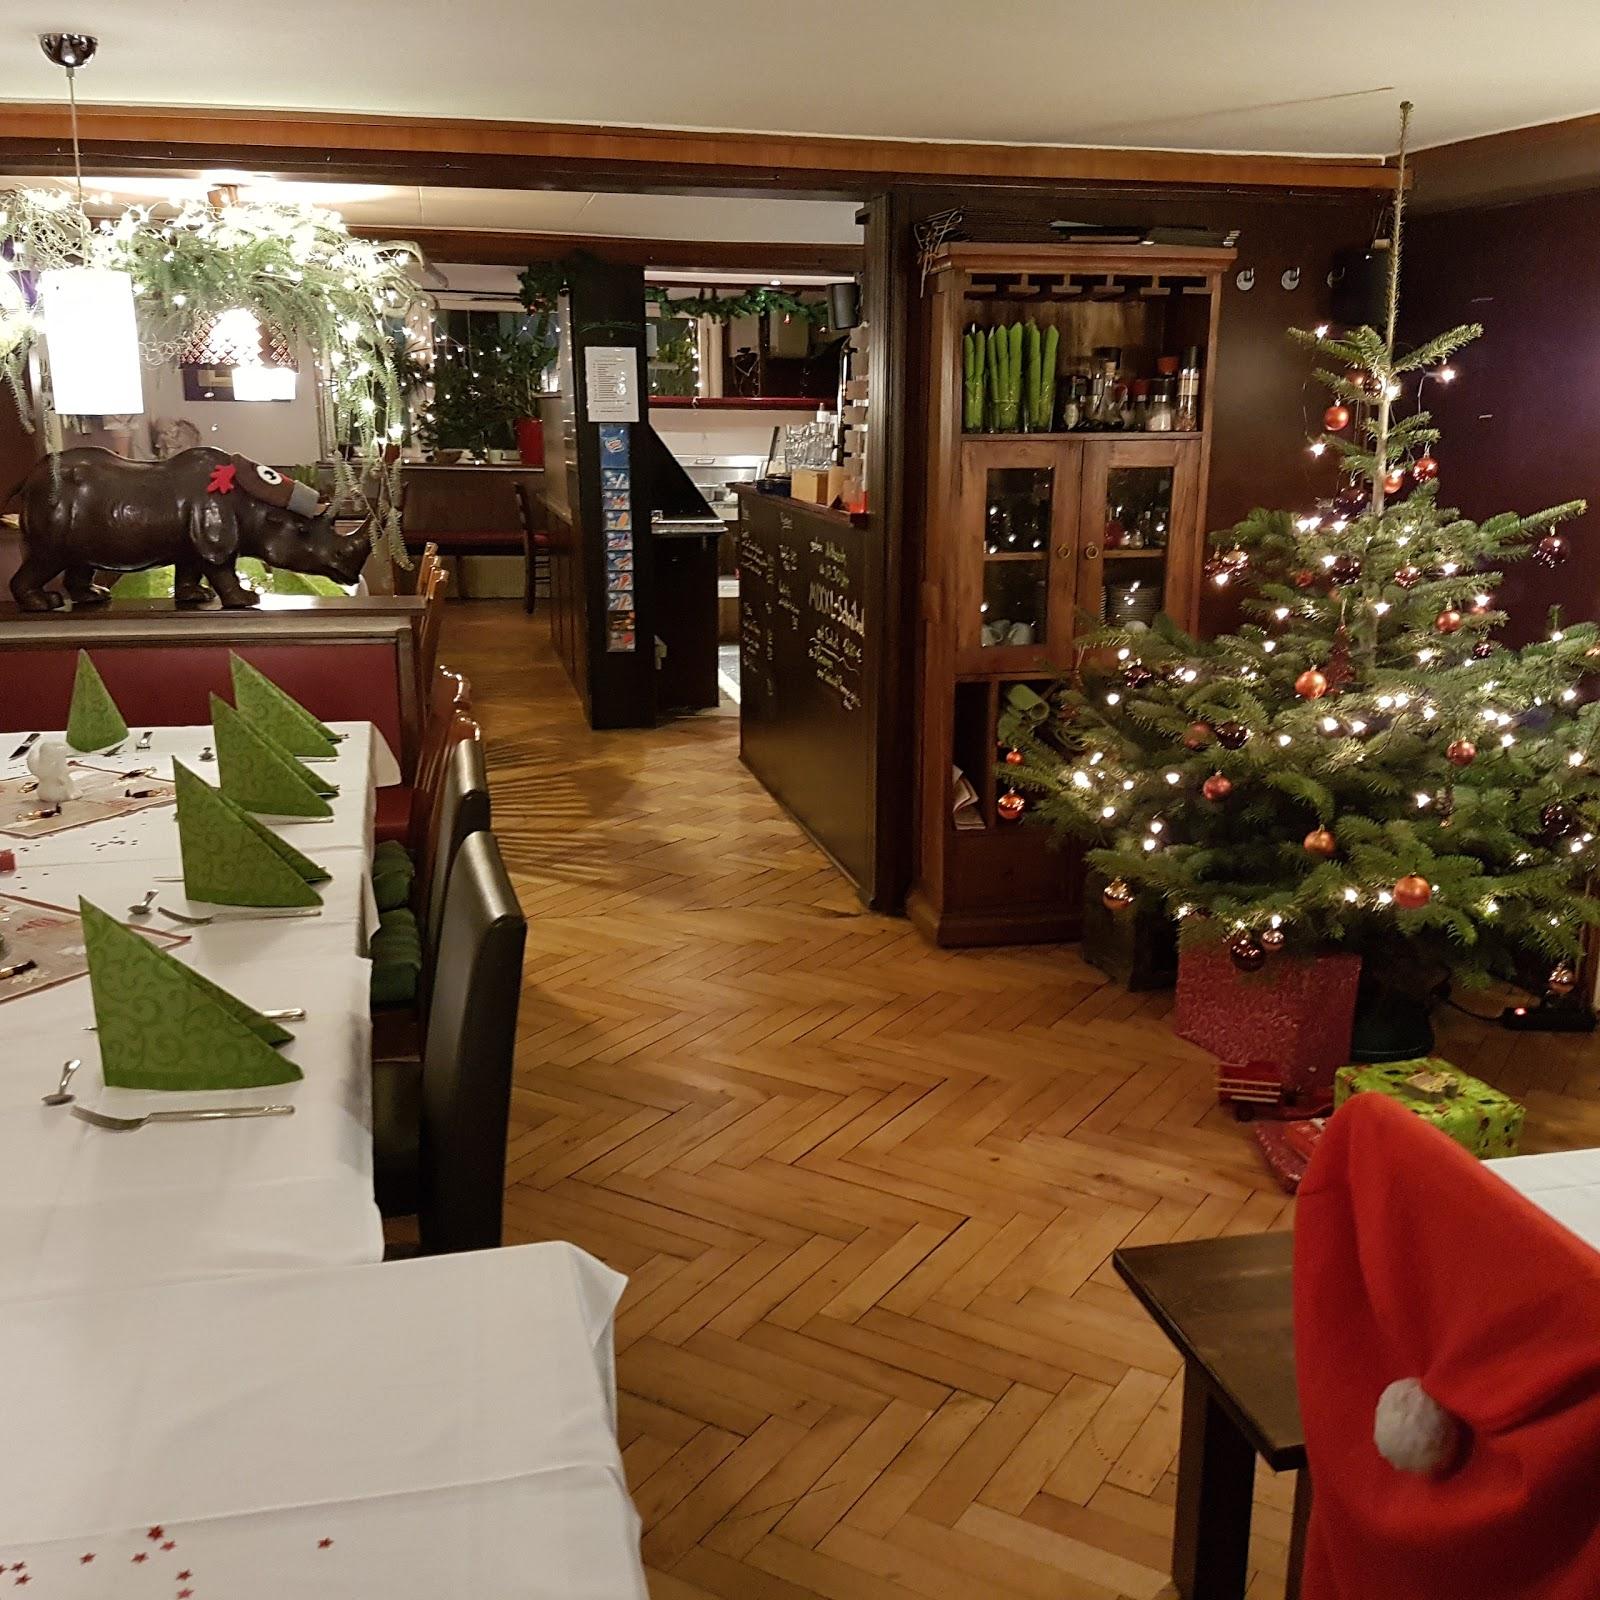 Restaurant "Restaurant  Viva " in  Bergatreute